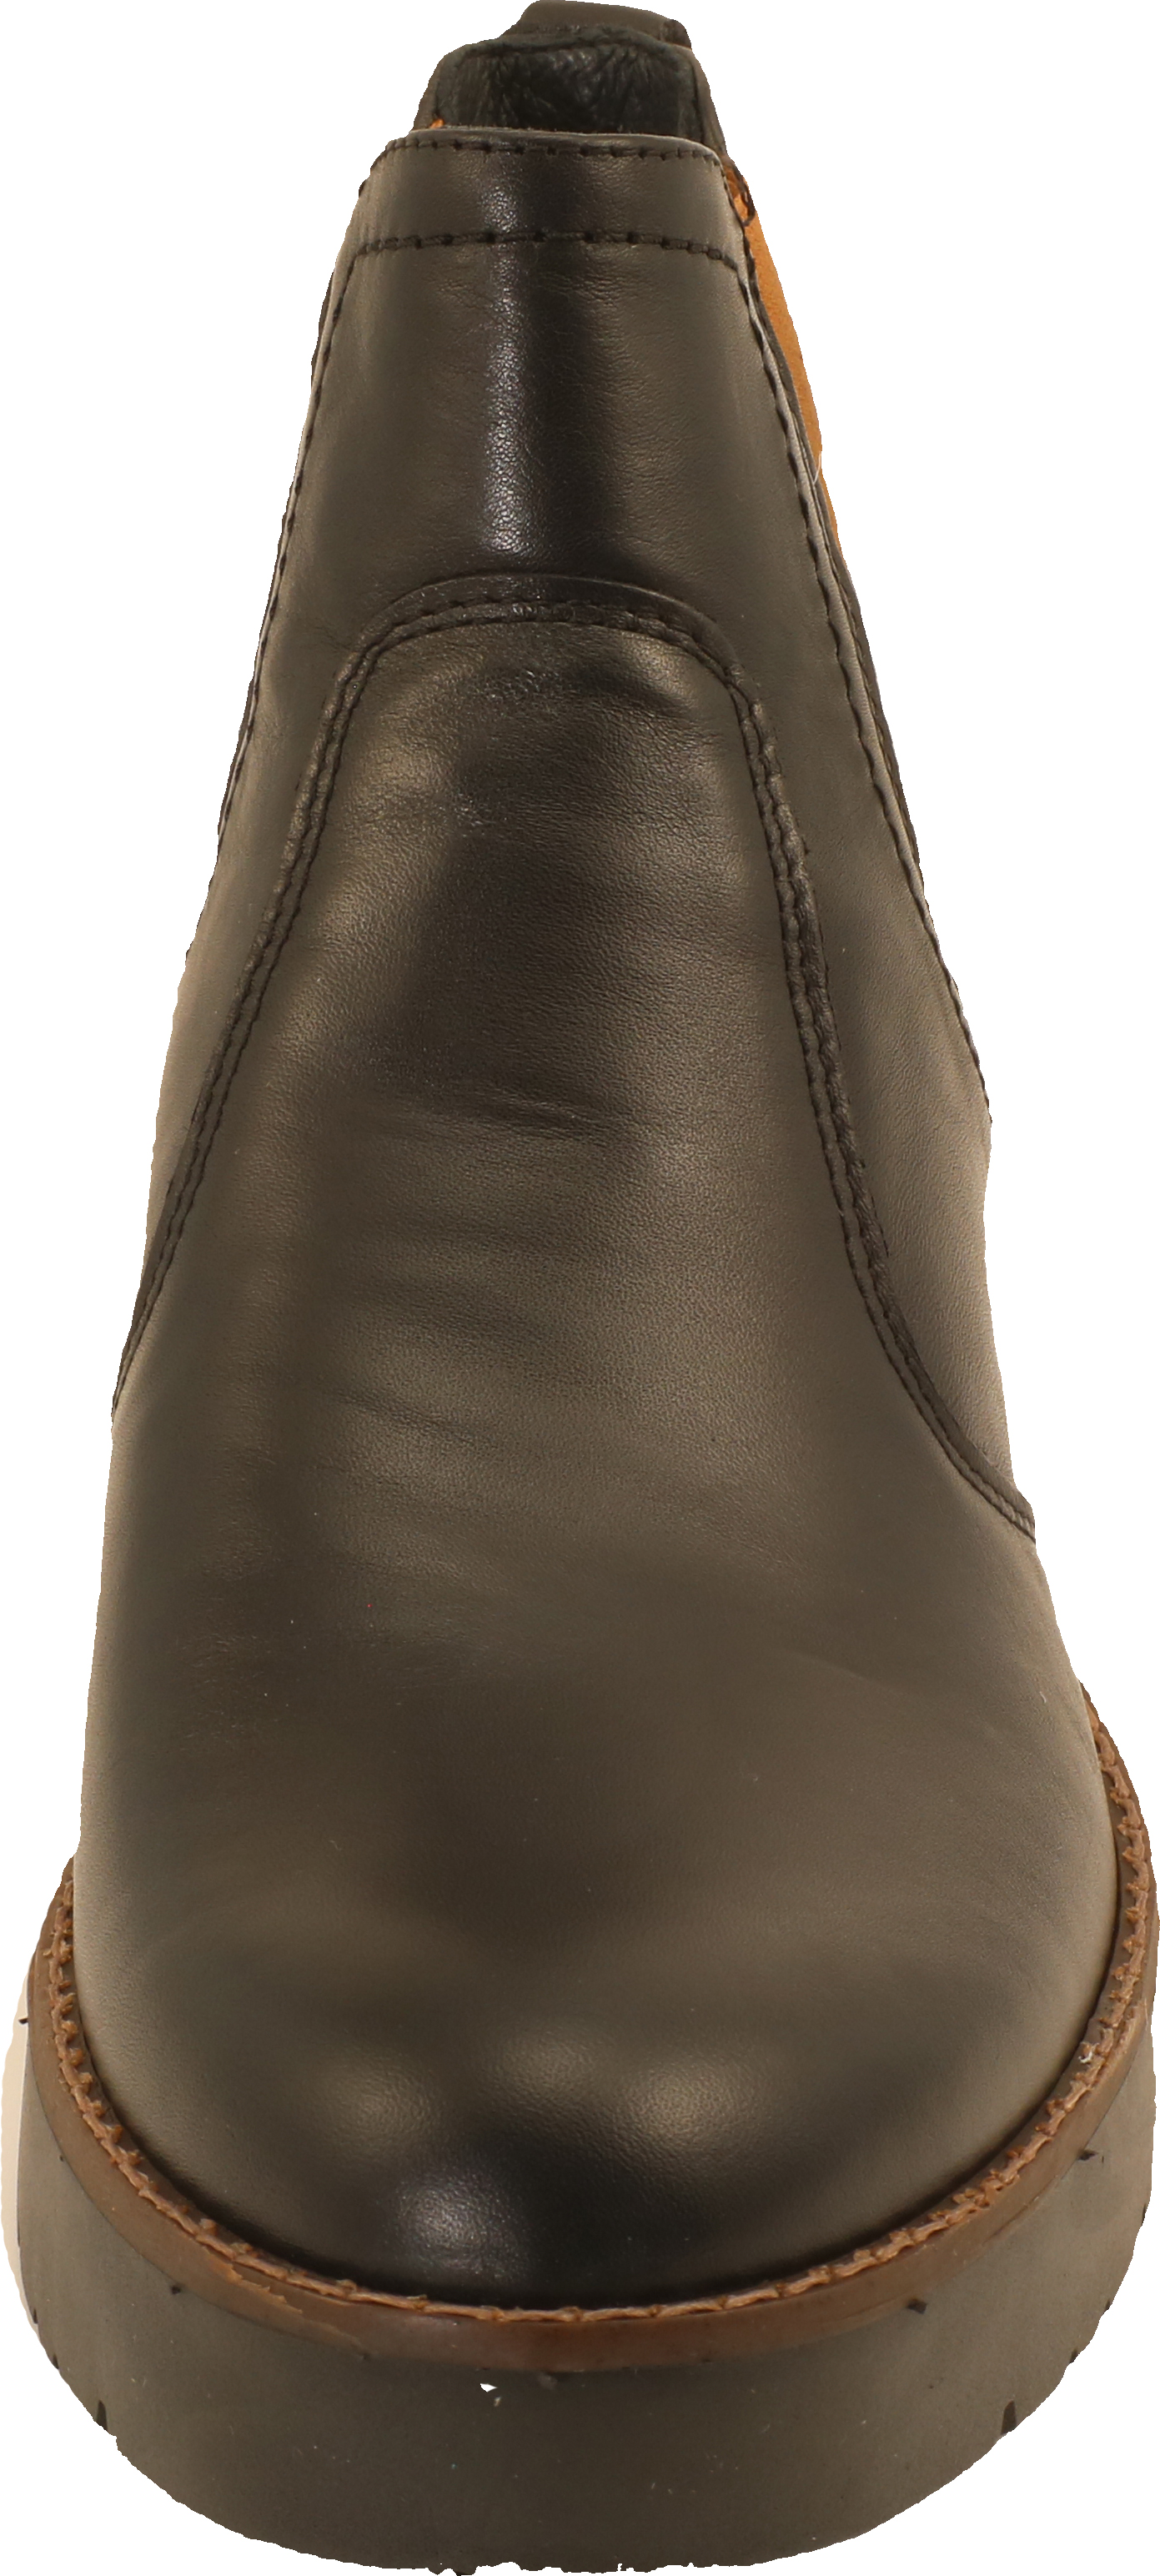 DBK 81516 - Black Leather